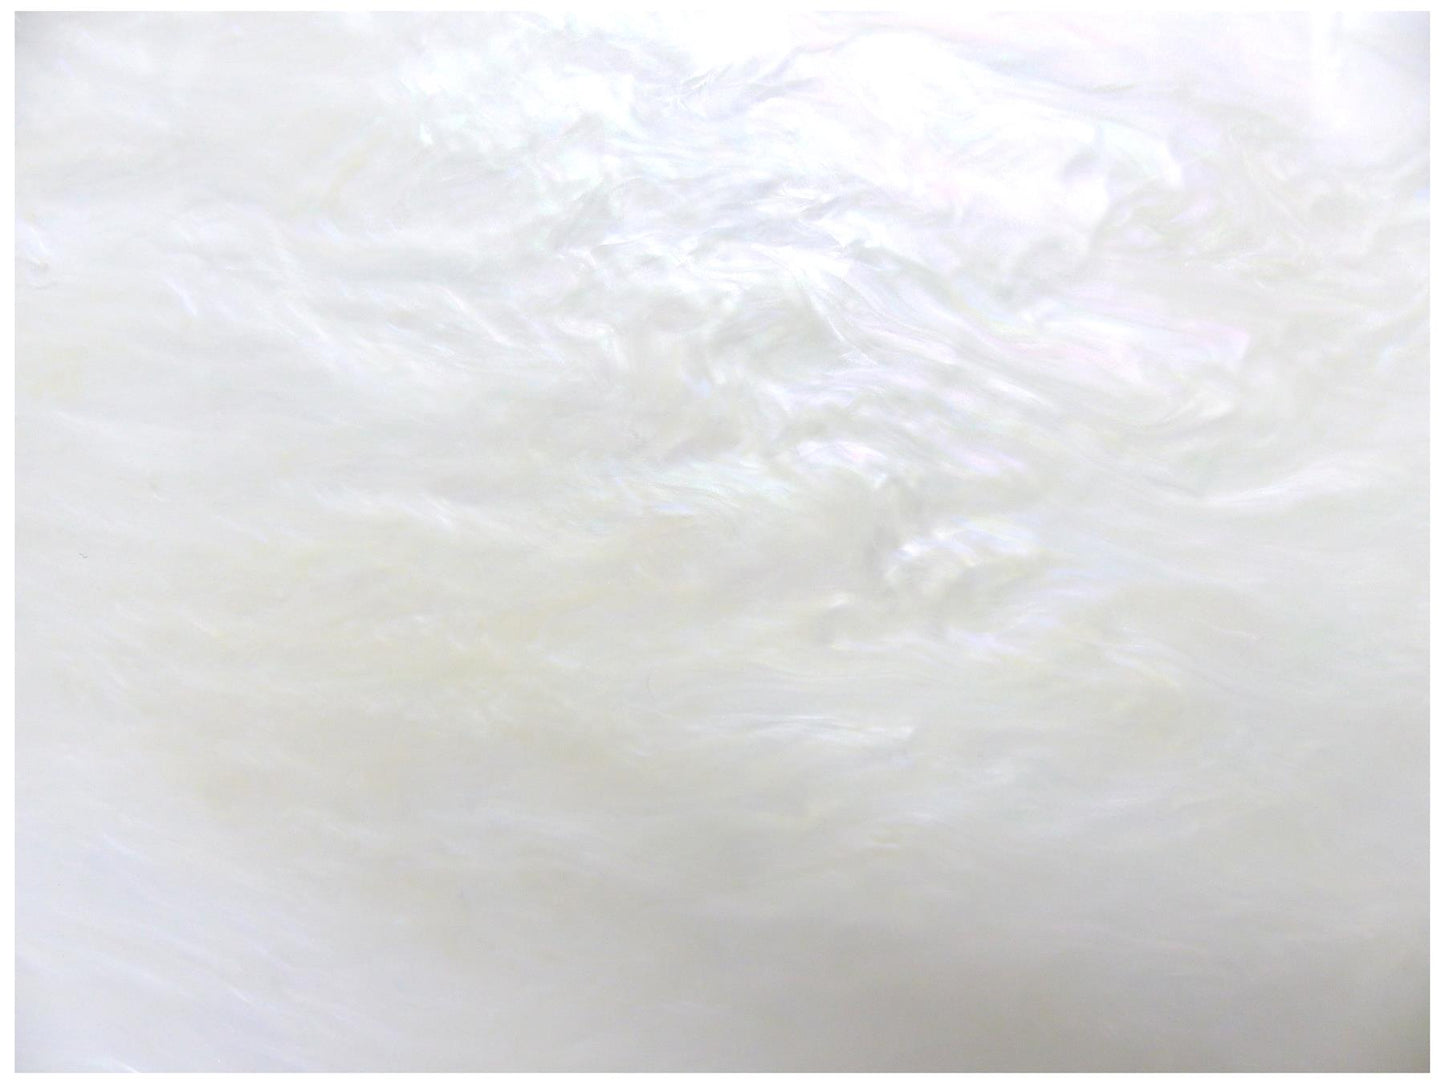 Luthitec White Pearl PVC Sheet - 430x290x0.5mm (16.9x11.42x0.02")